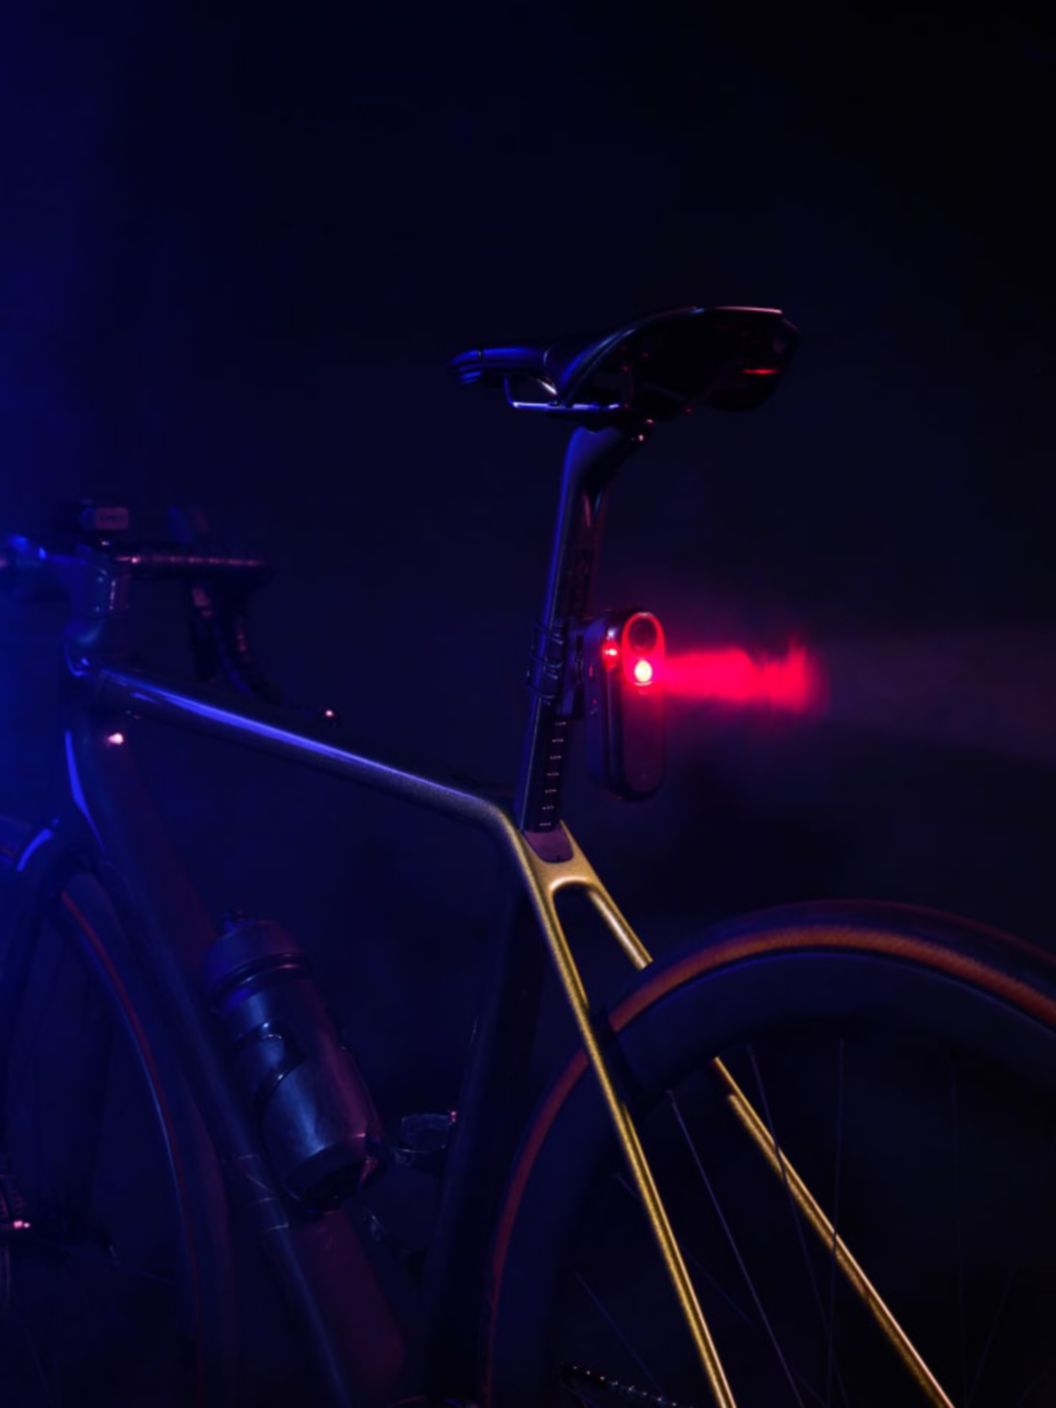 The rear light of a road bike beams through light mist.